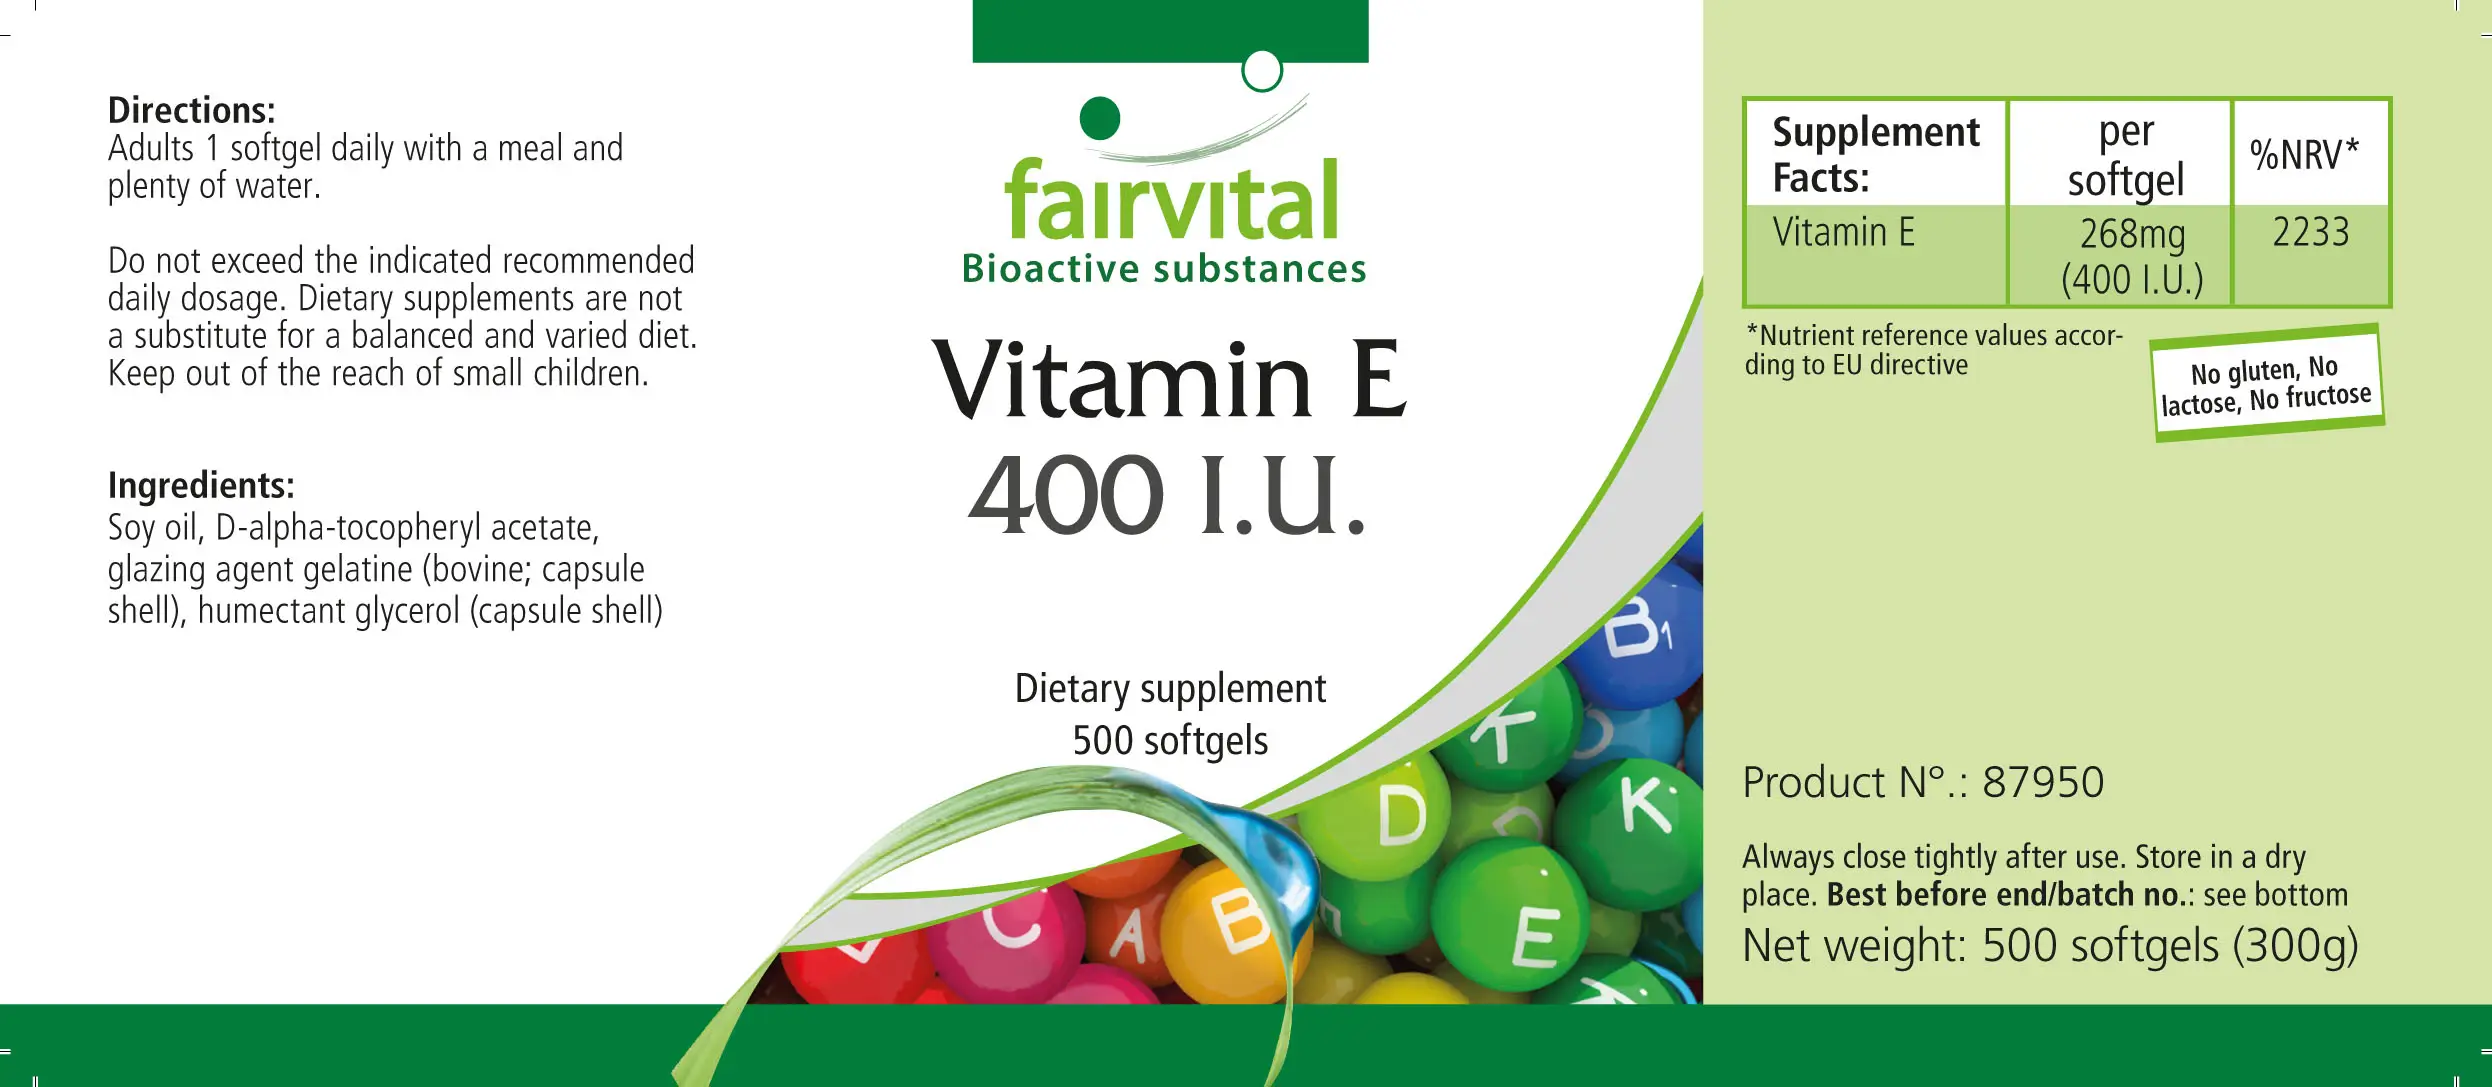 Vitamine E 400 I.U. - grootverpakking - 500 softgels